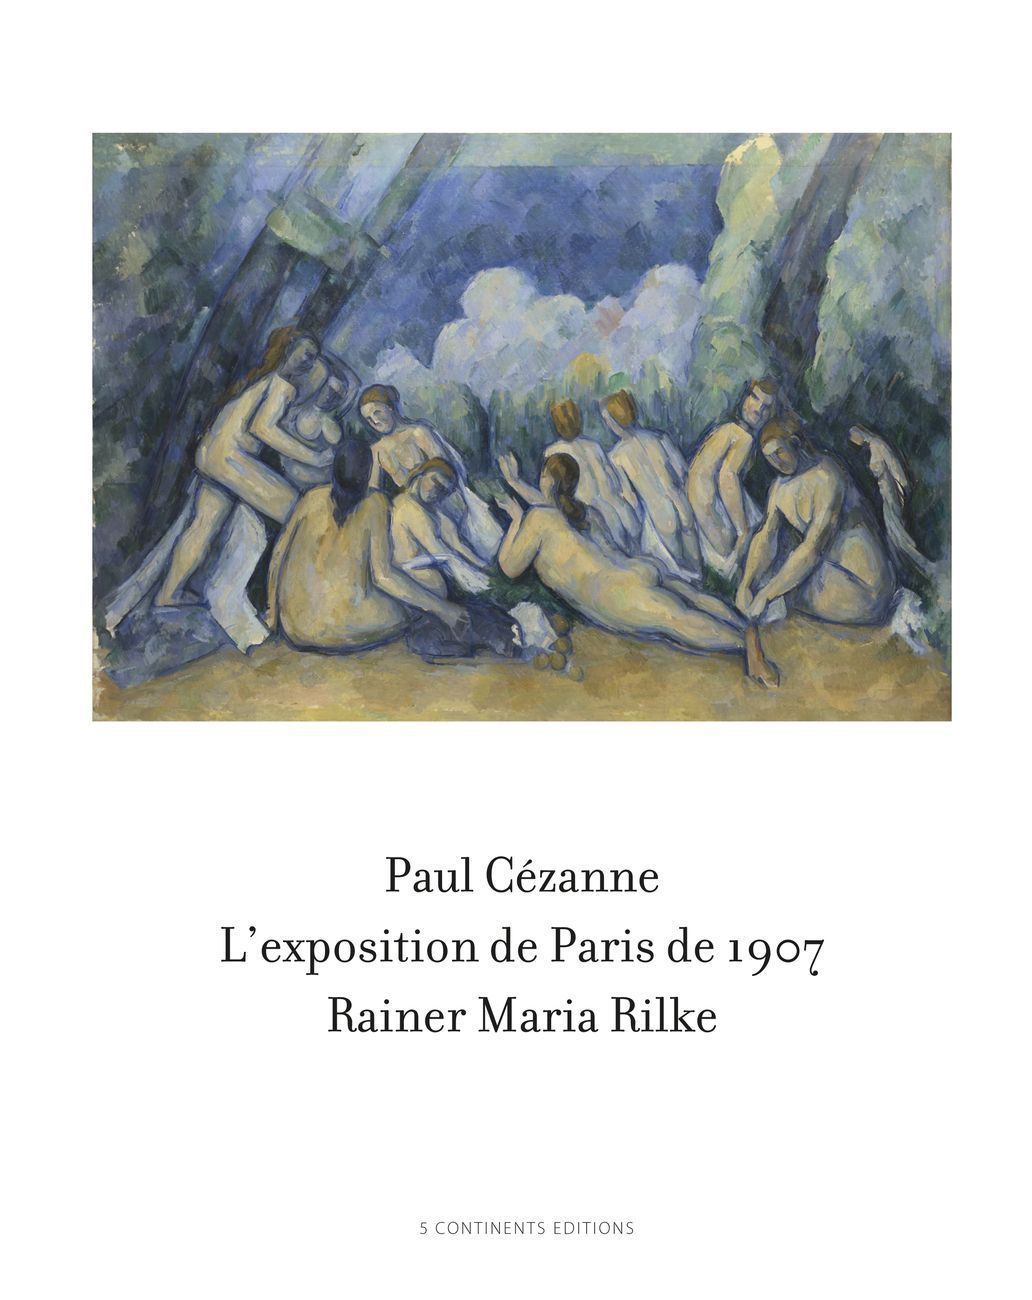 Paul Cézanne (5 Continents, Milano 2018)